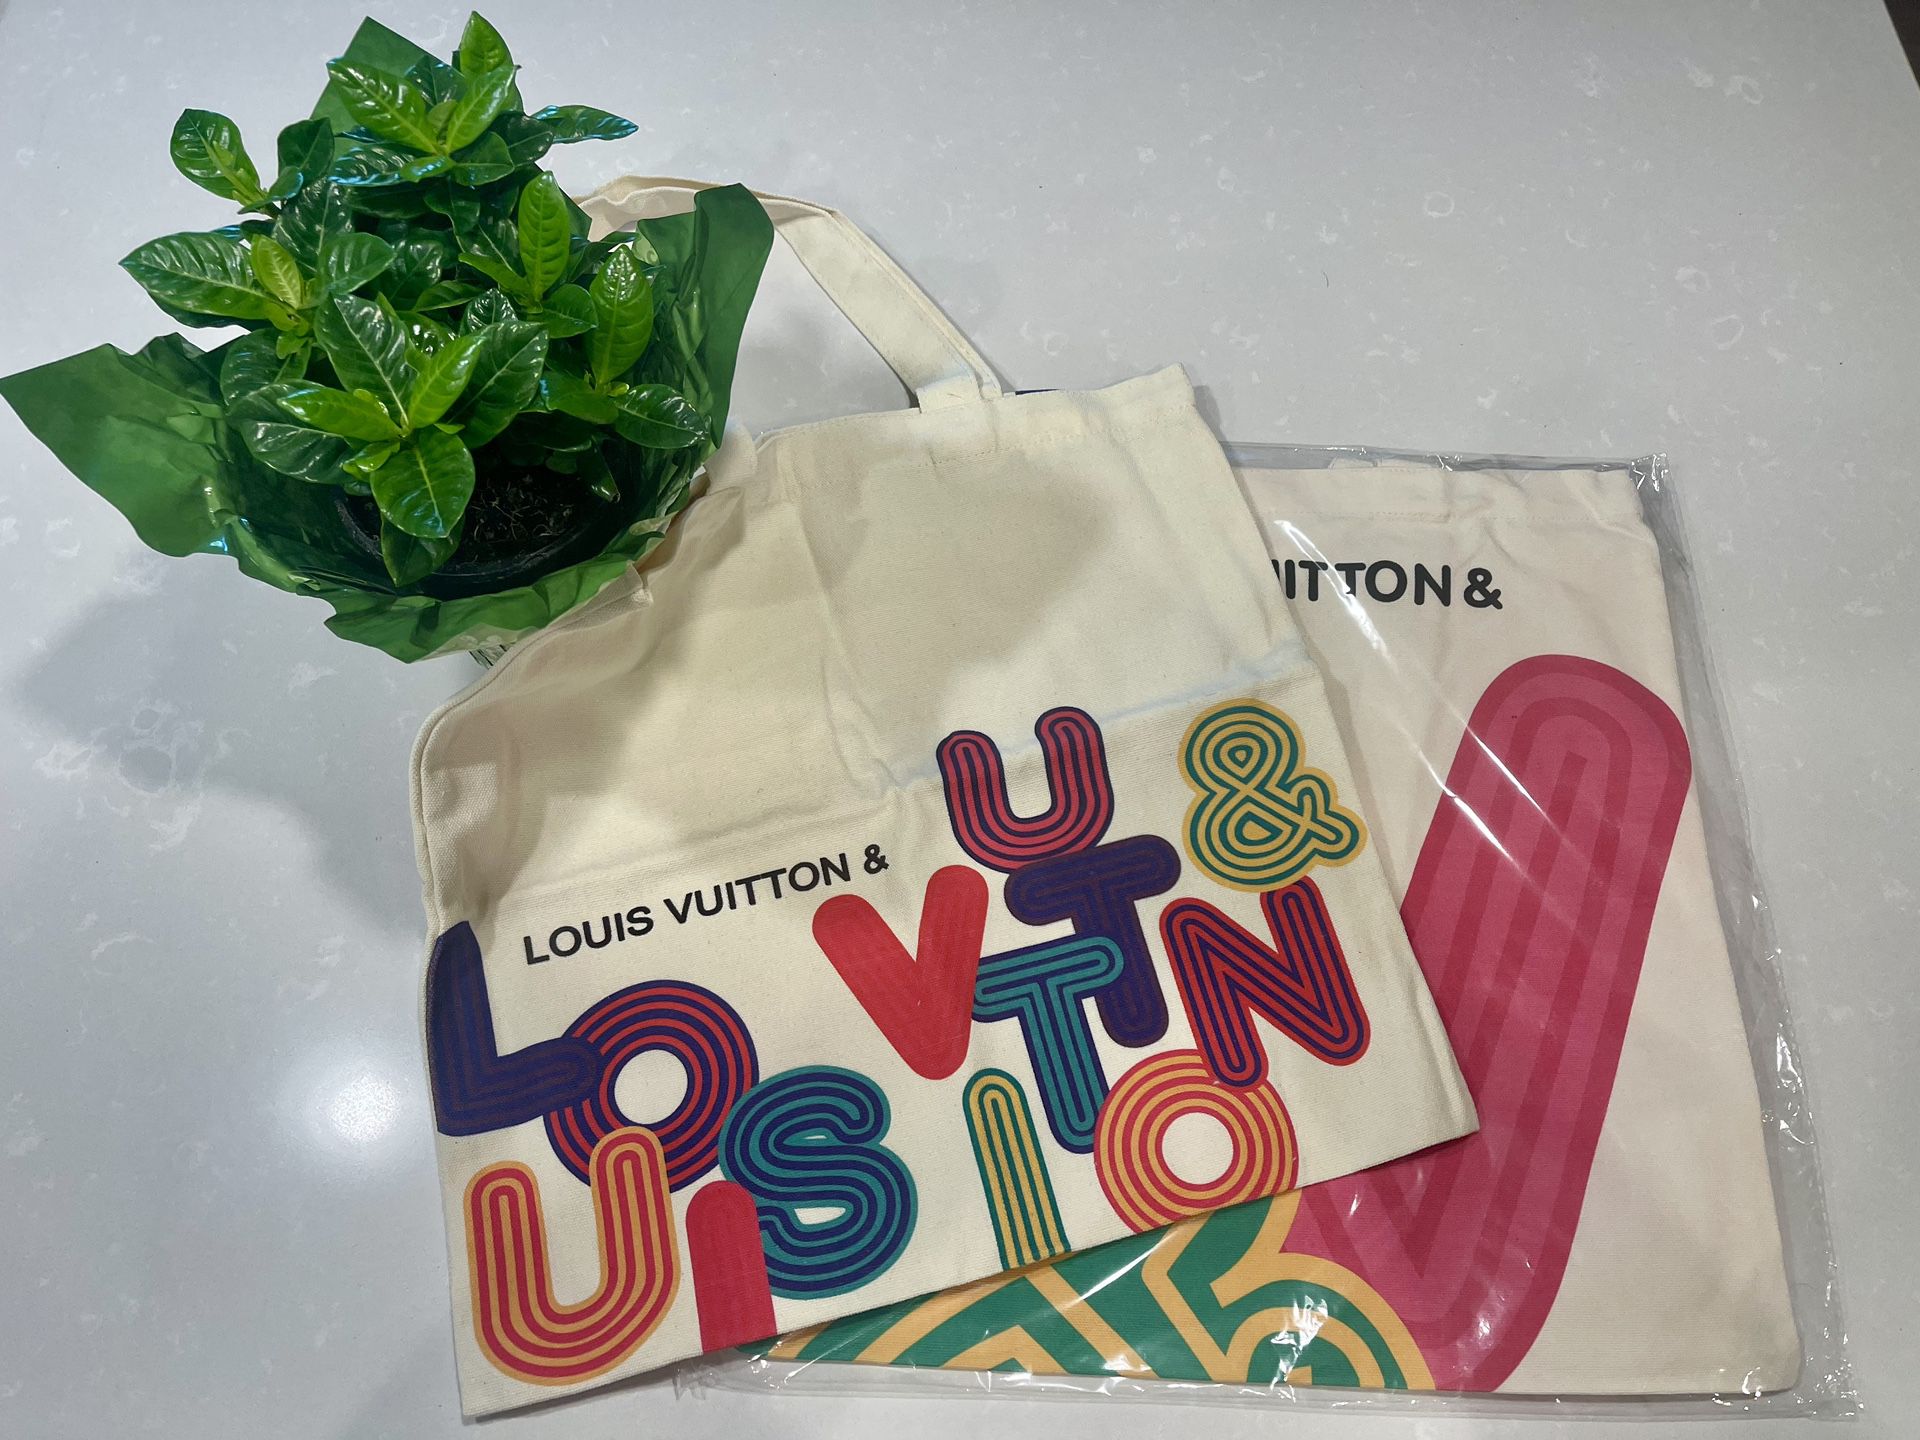 Louis Vuitton & Canvas Tote Bag Limited Edition Shenzhen Exhibition